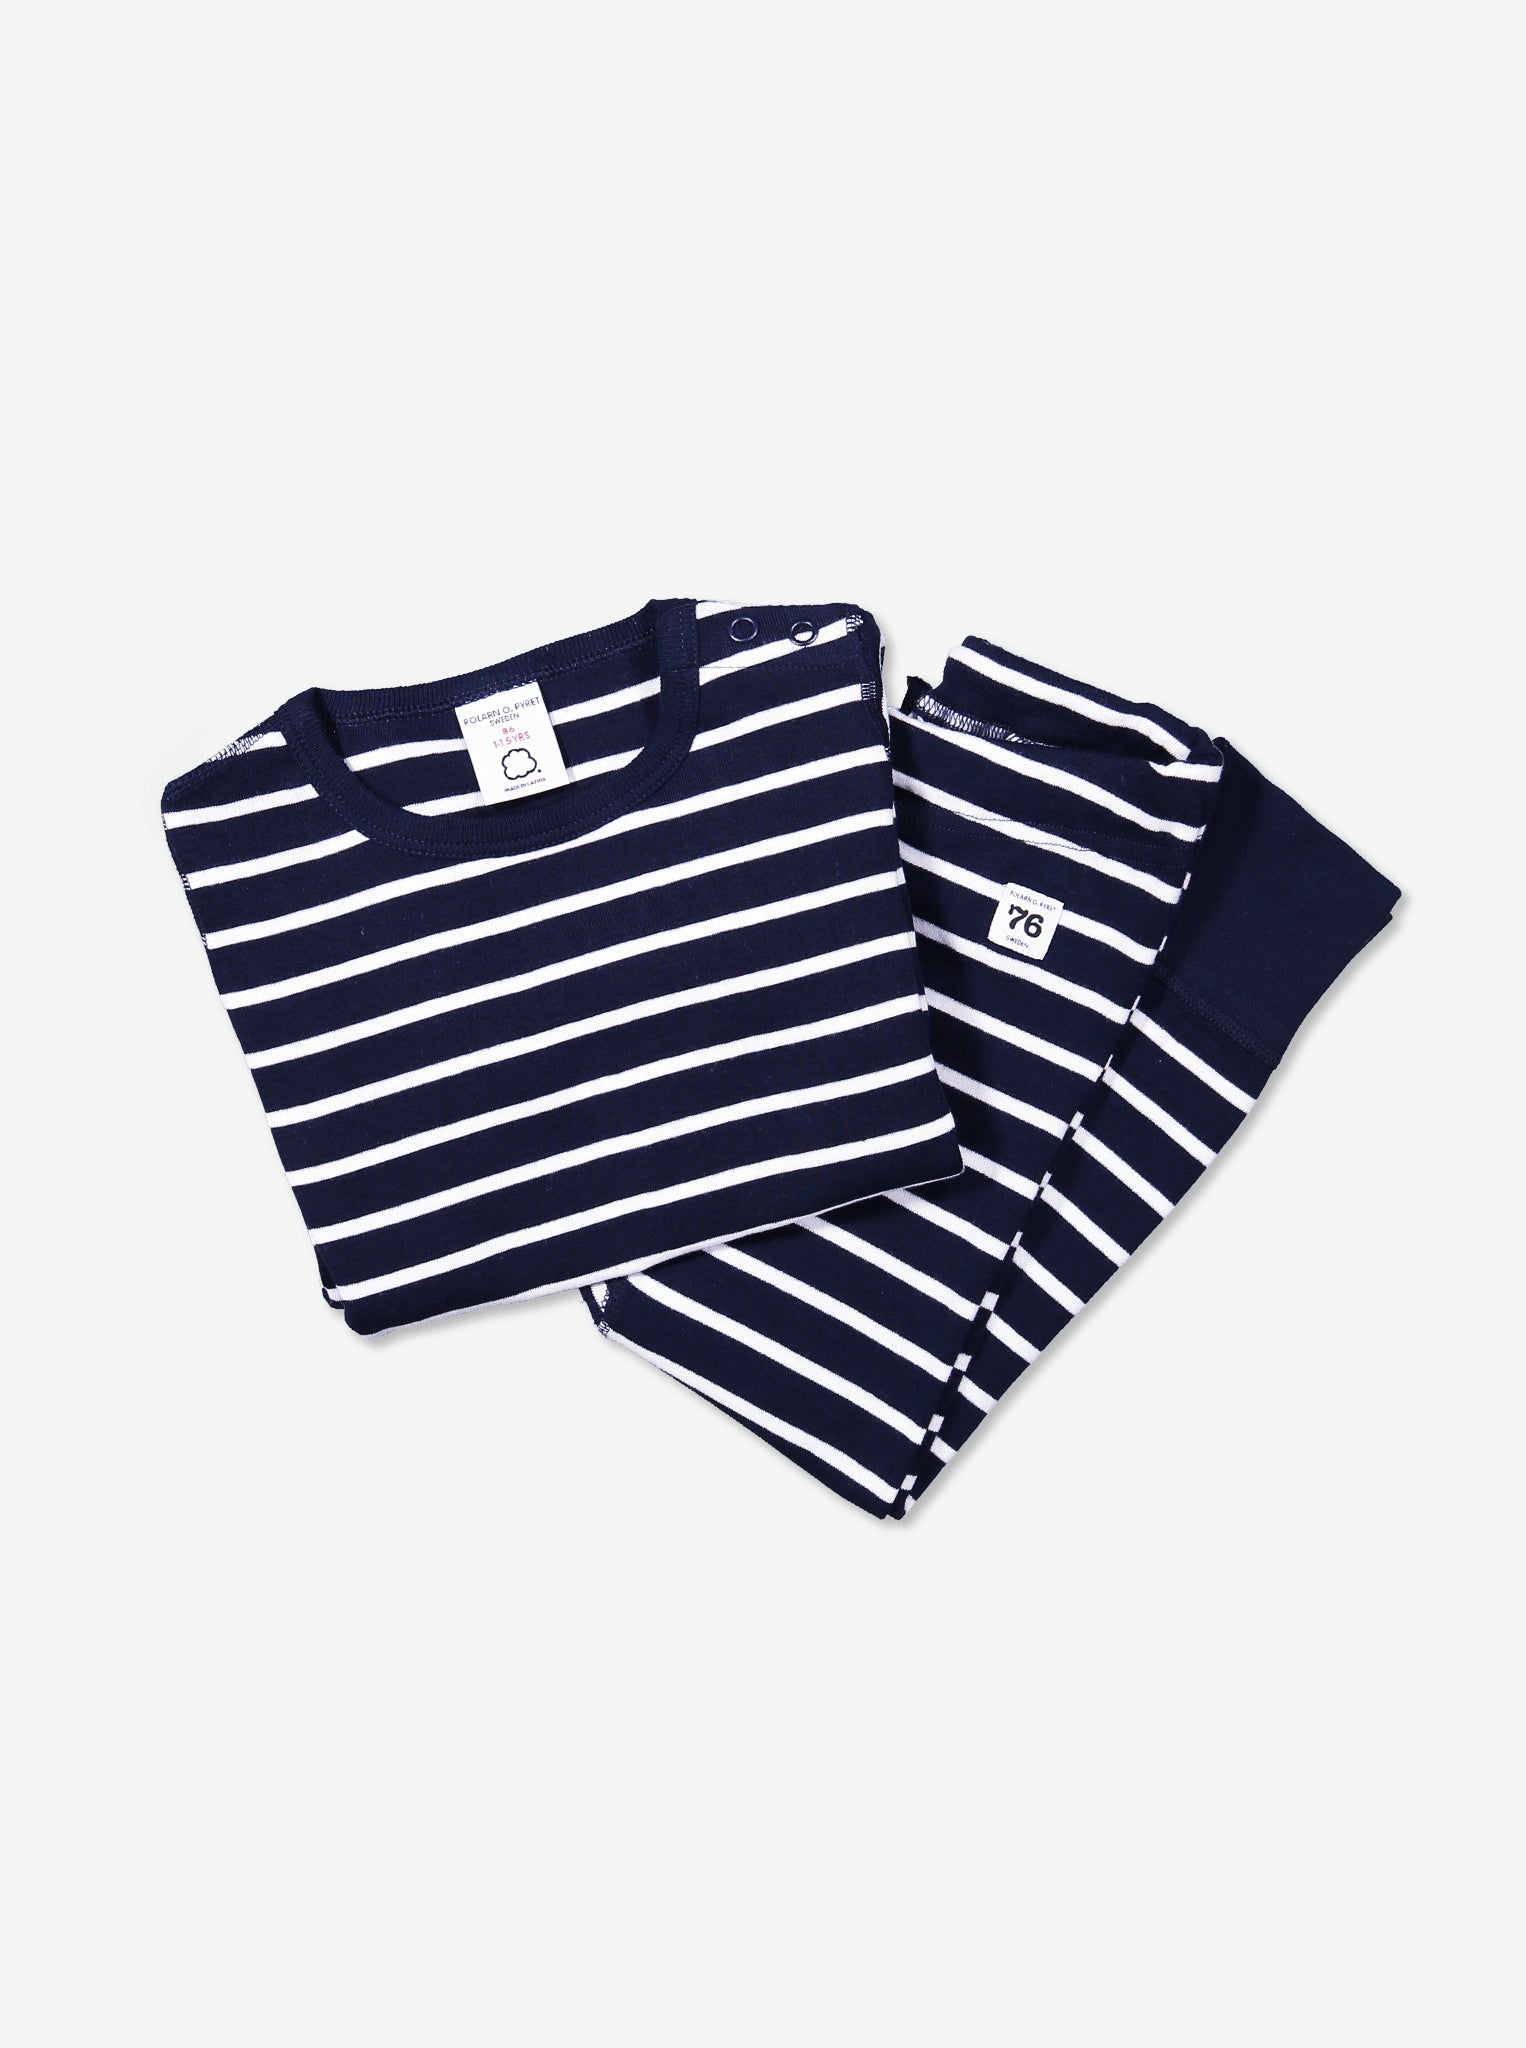 newborn babygrow navy stripes, ethical quality organic cotton, polarn o. pyret classic